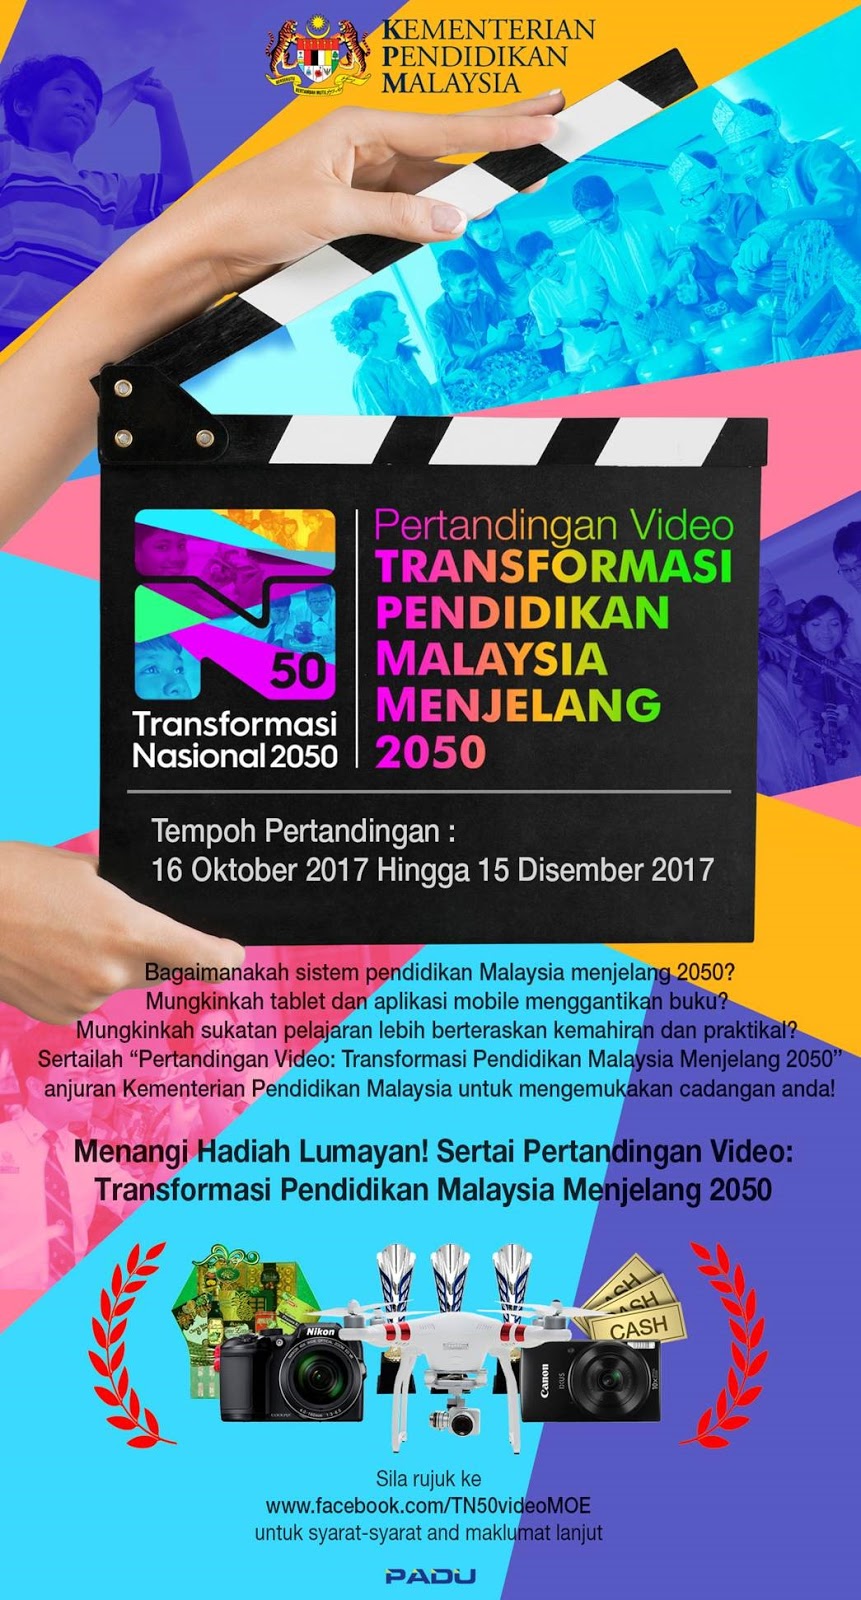 Pertandingan Video Transformasi Pendidikan Malaysia 